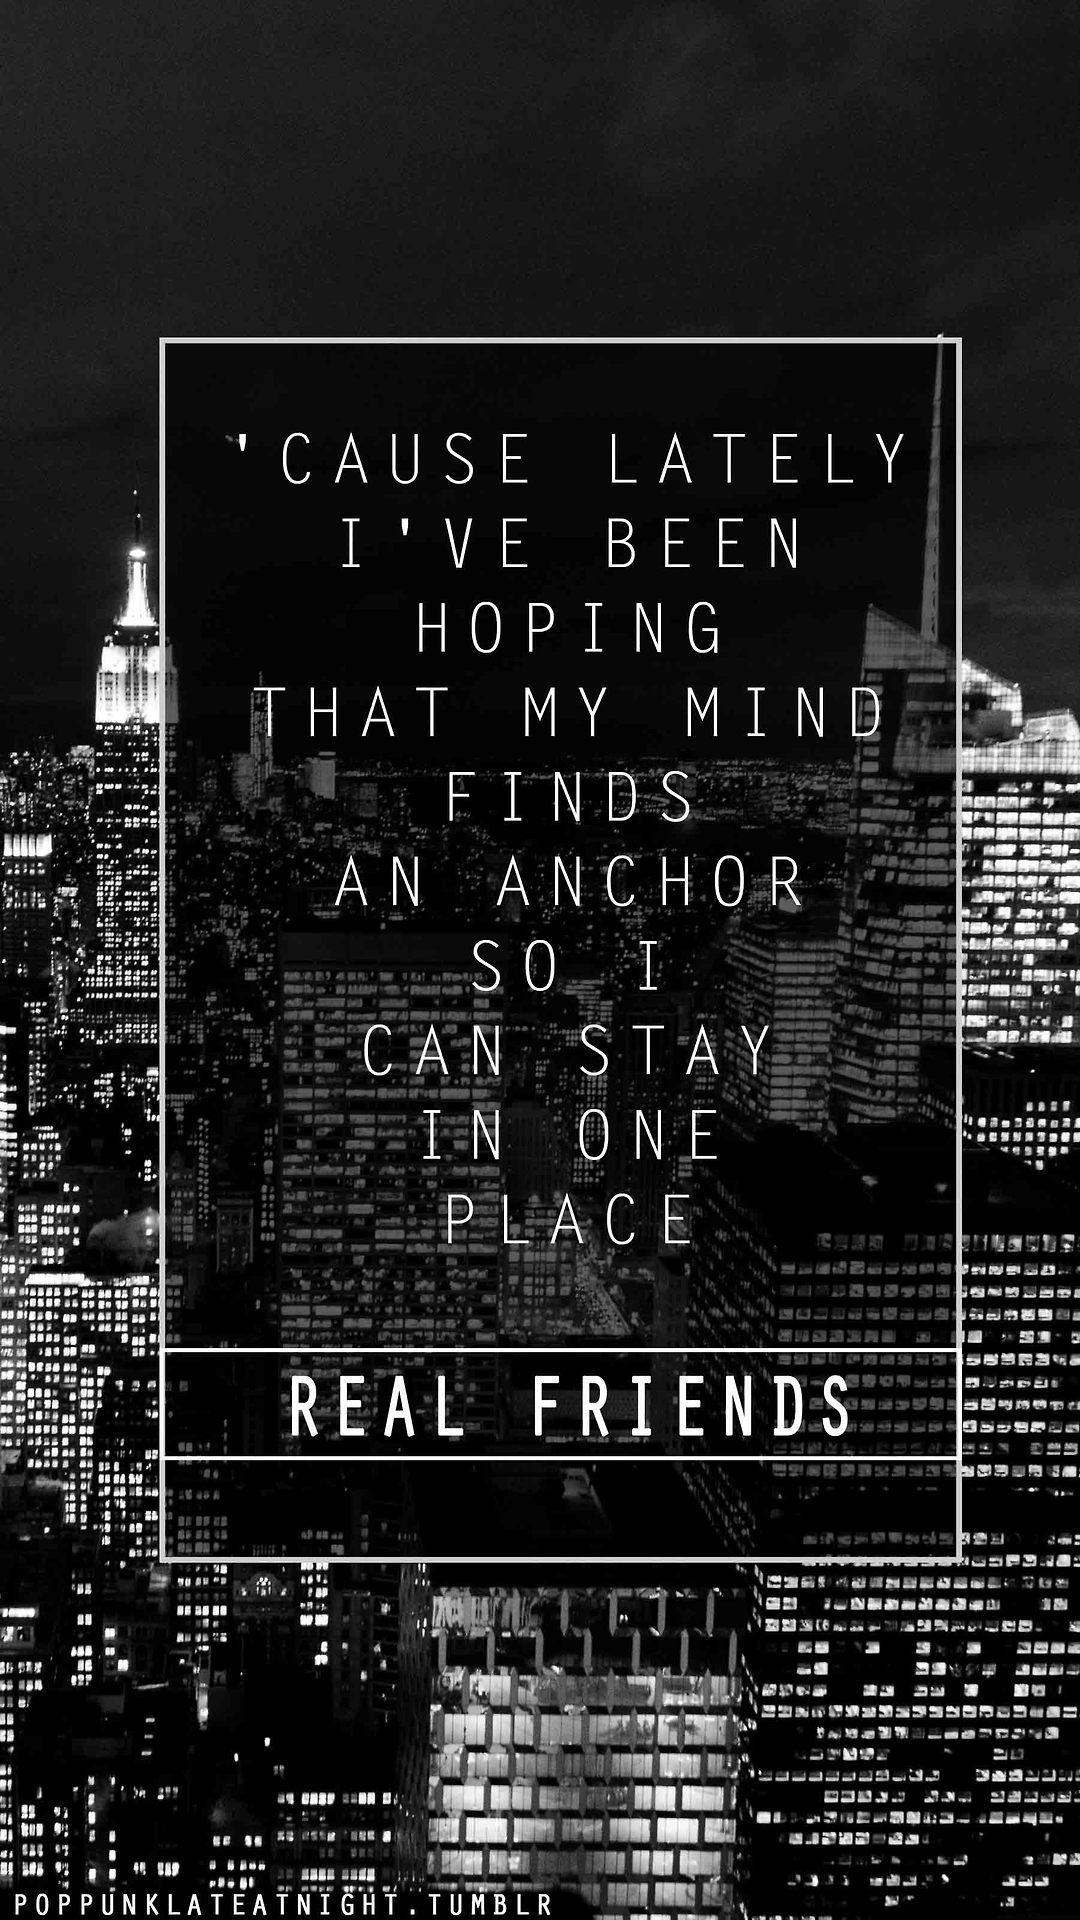 Real Friends Lyrics